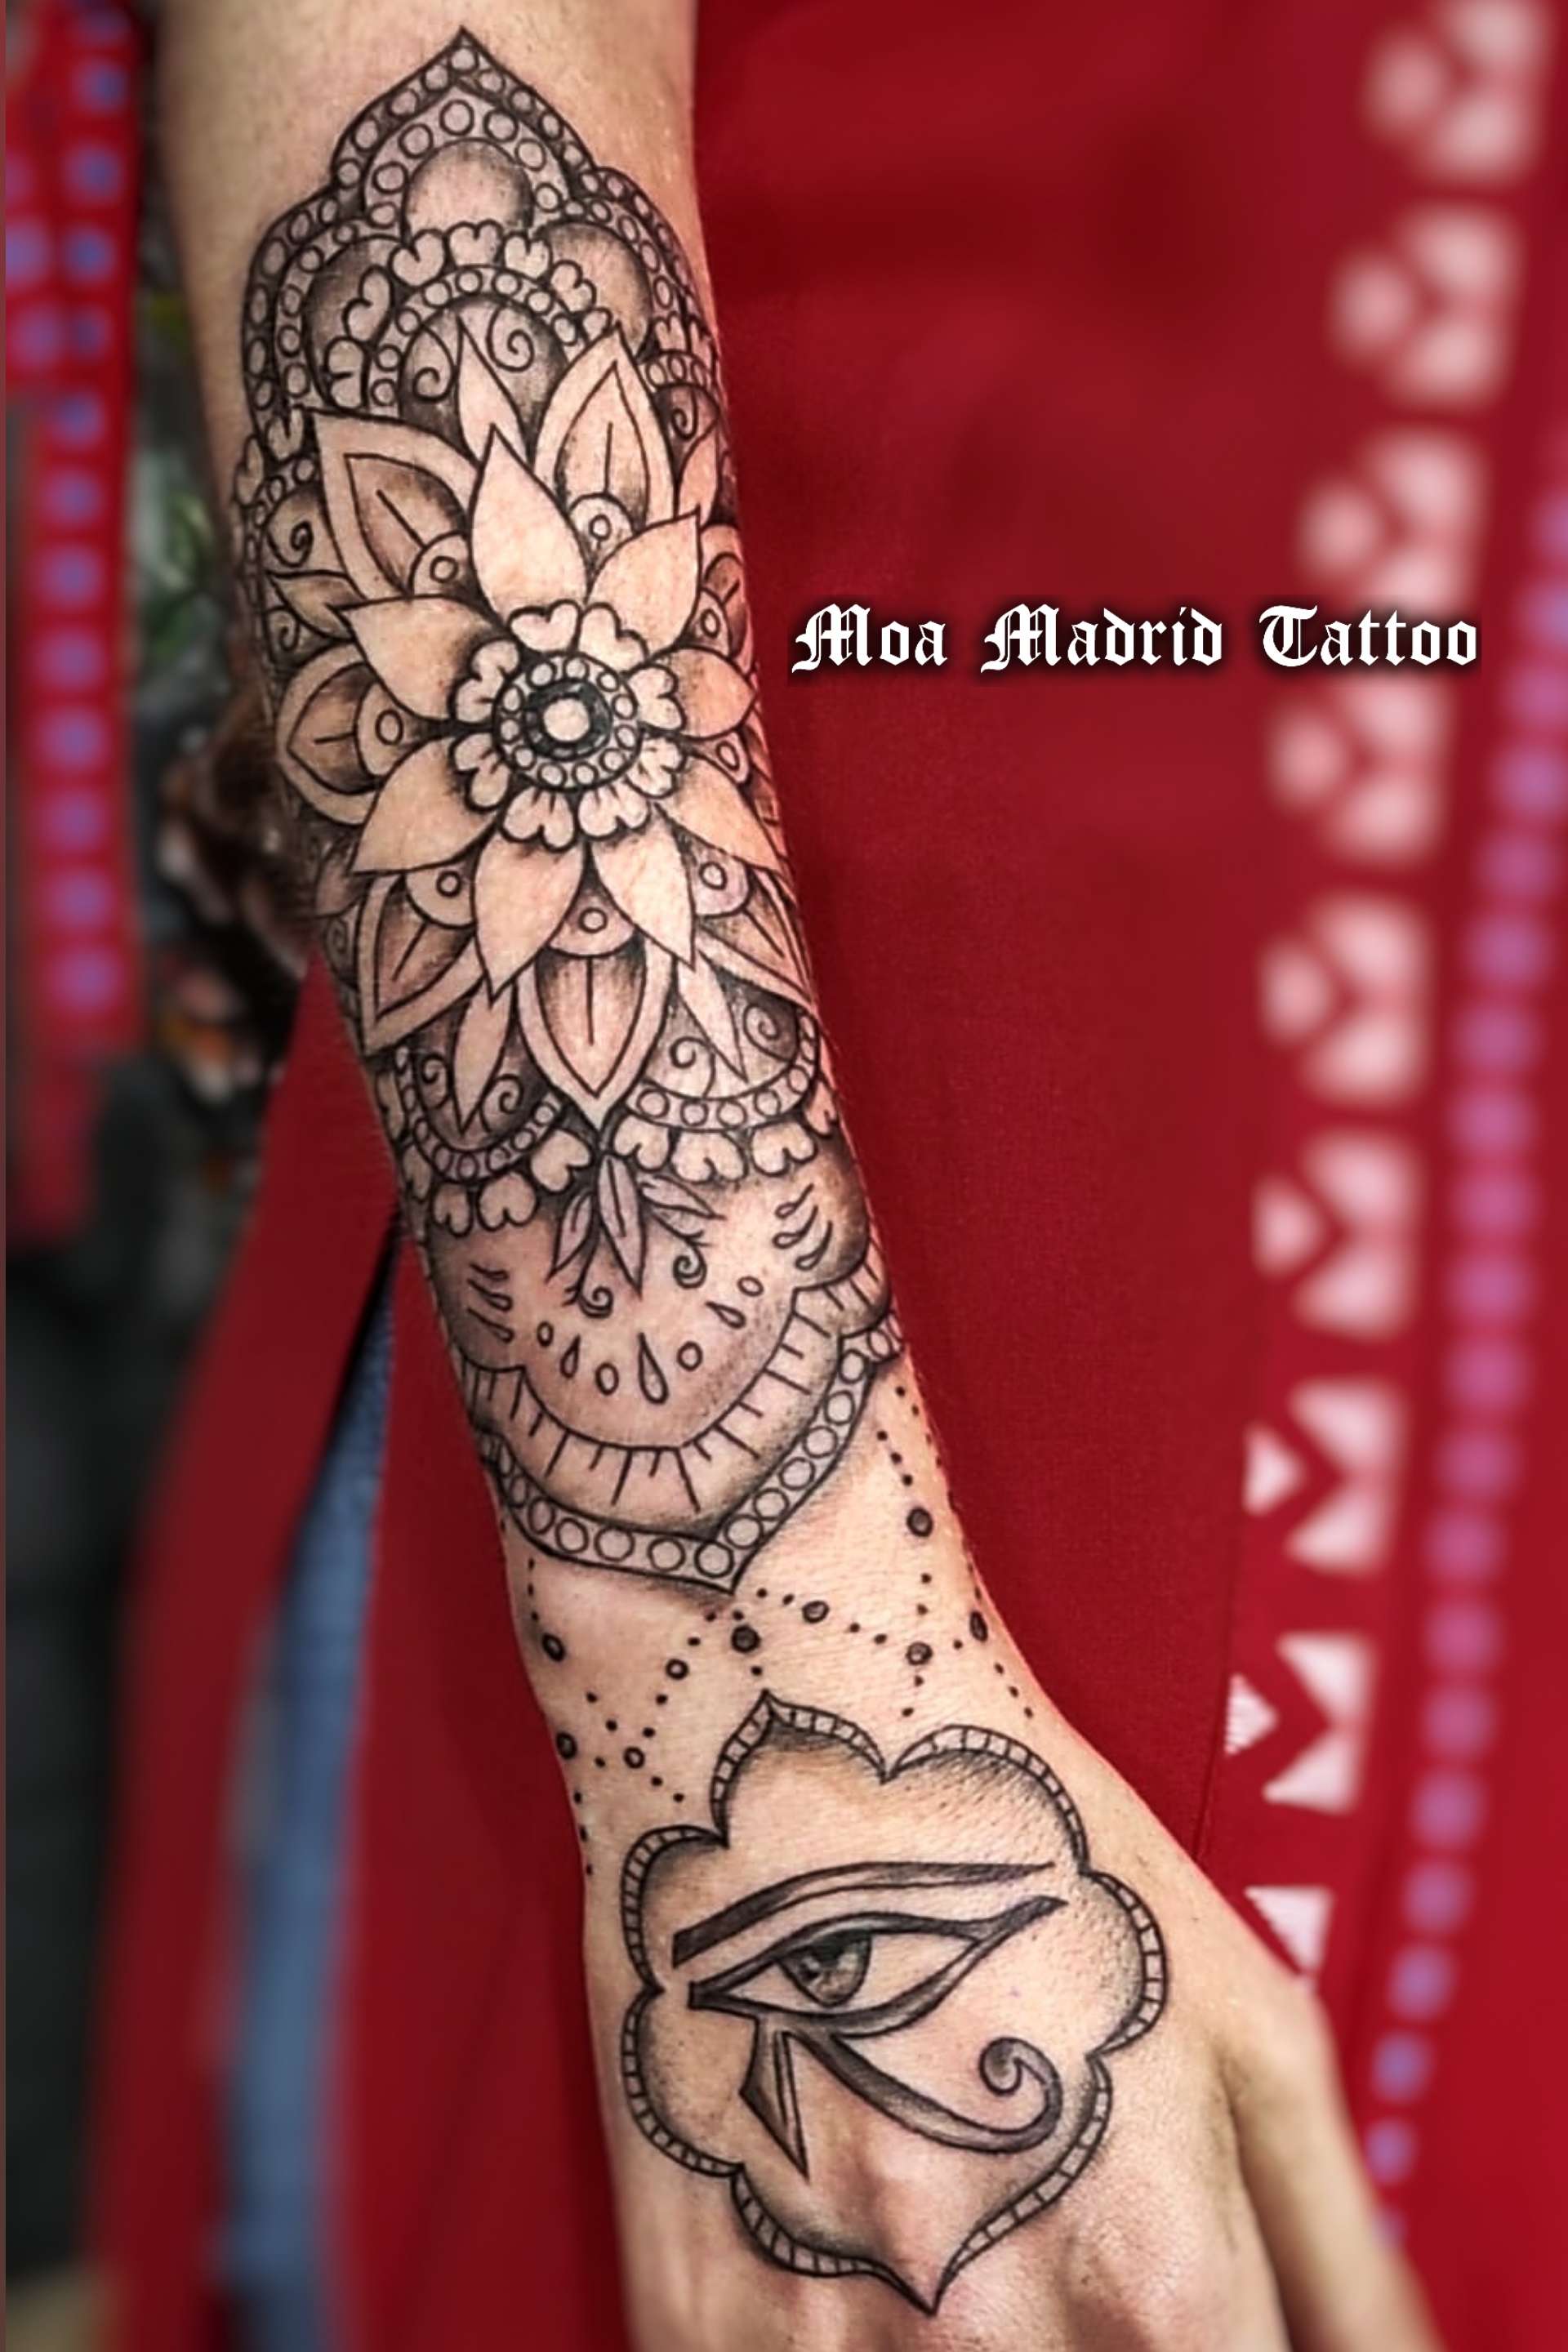 Gran tatuaje de mandala, diseño exclusivo en antebrazo | Moa Madrid Tattoo